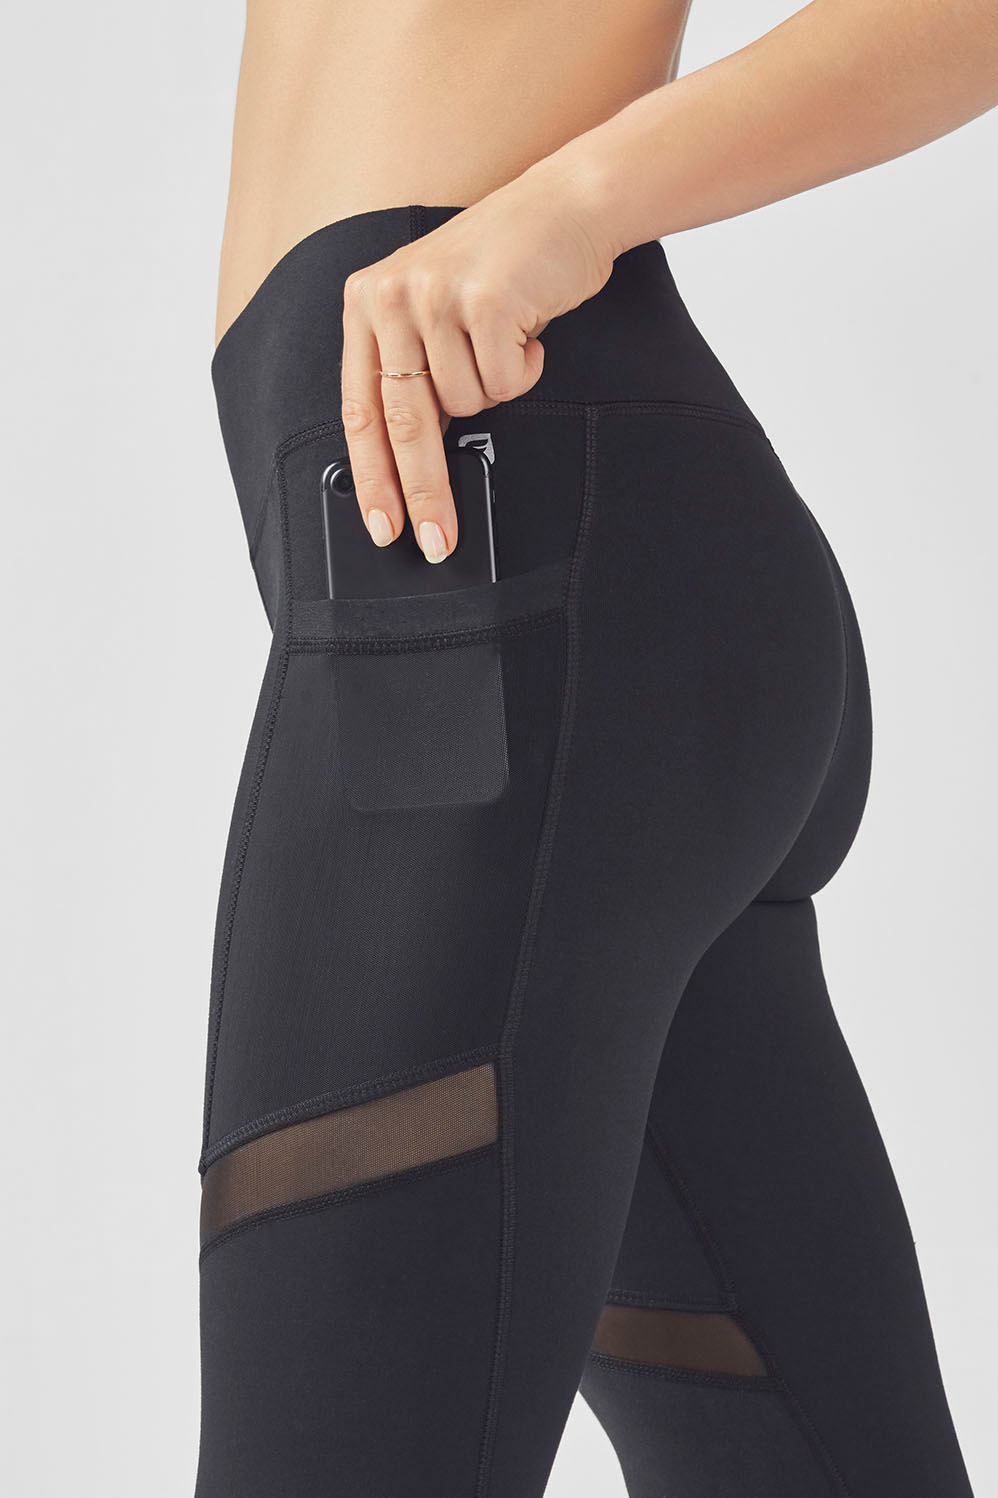 black mesh leggings with pockets